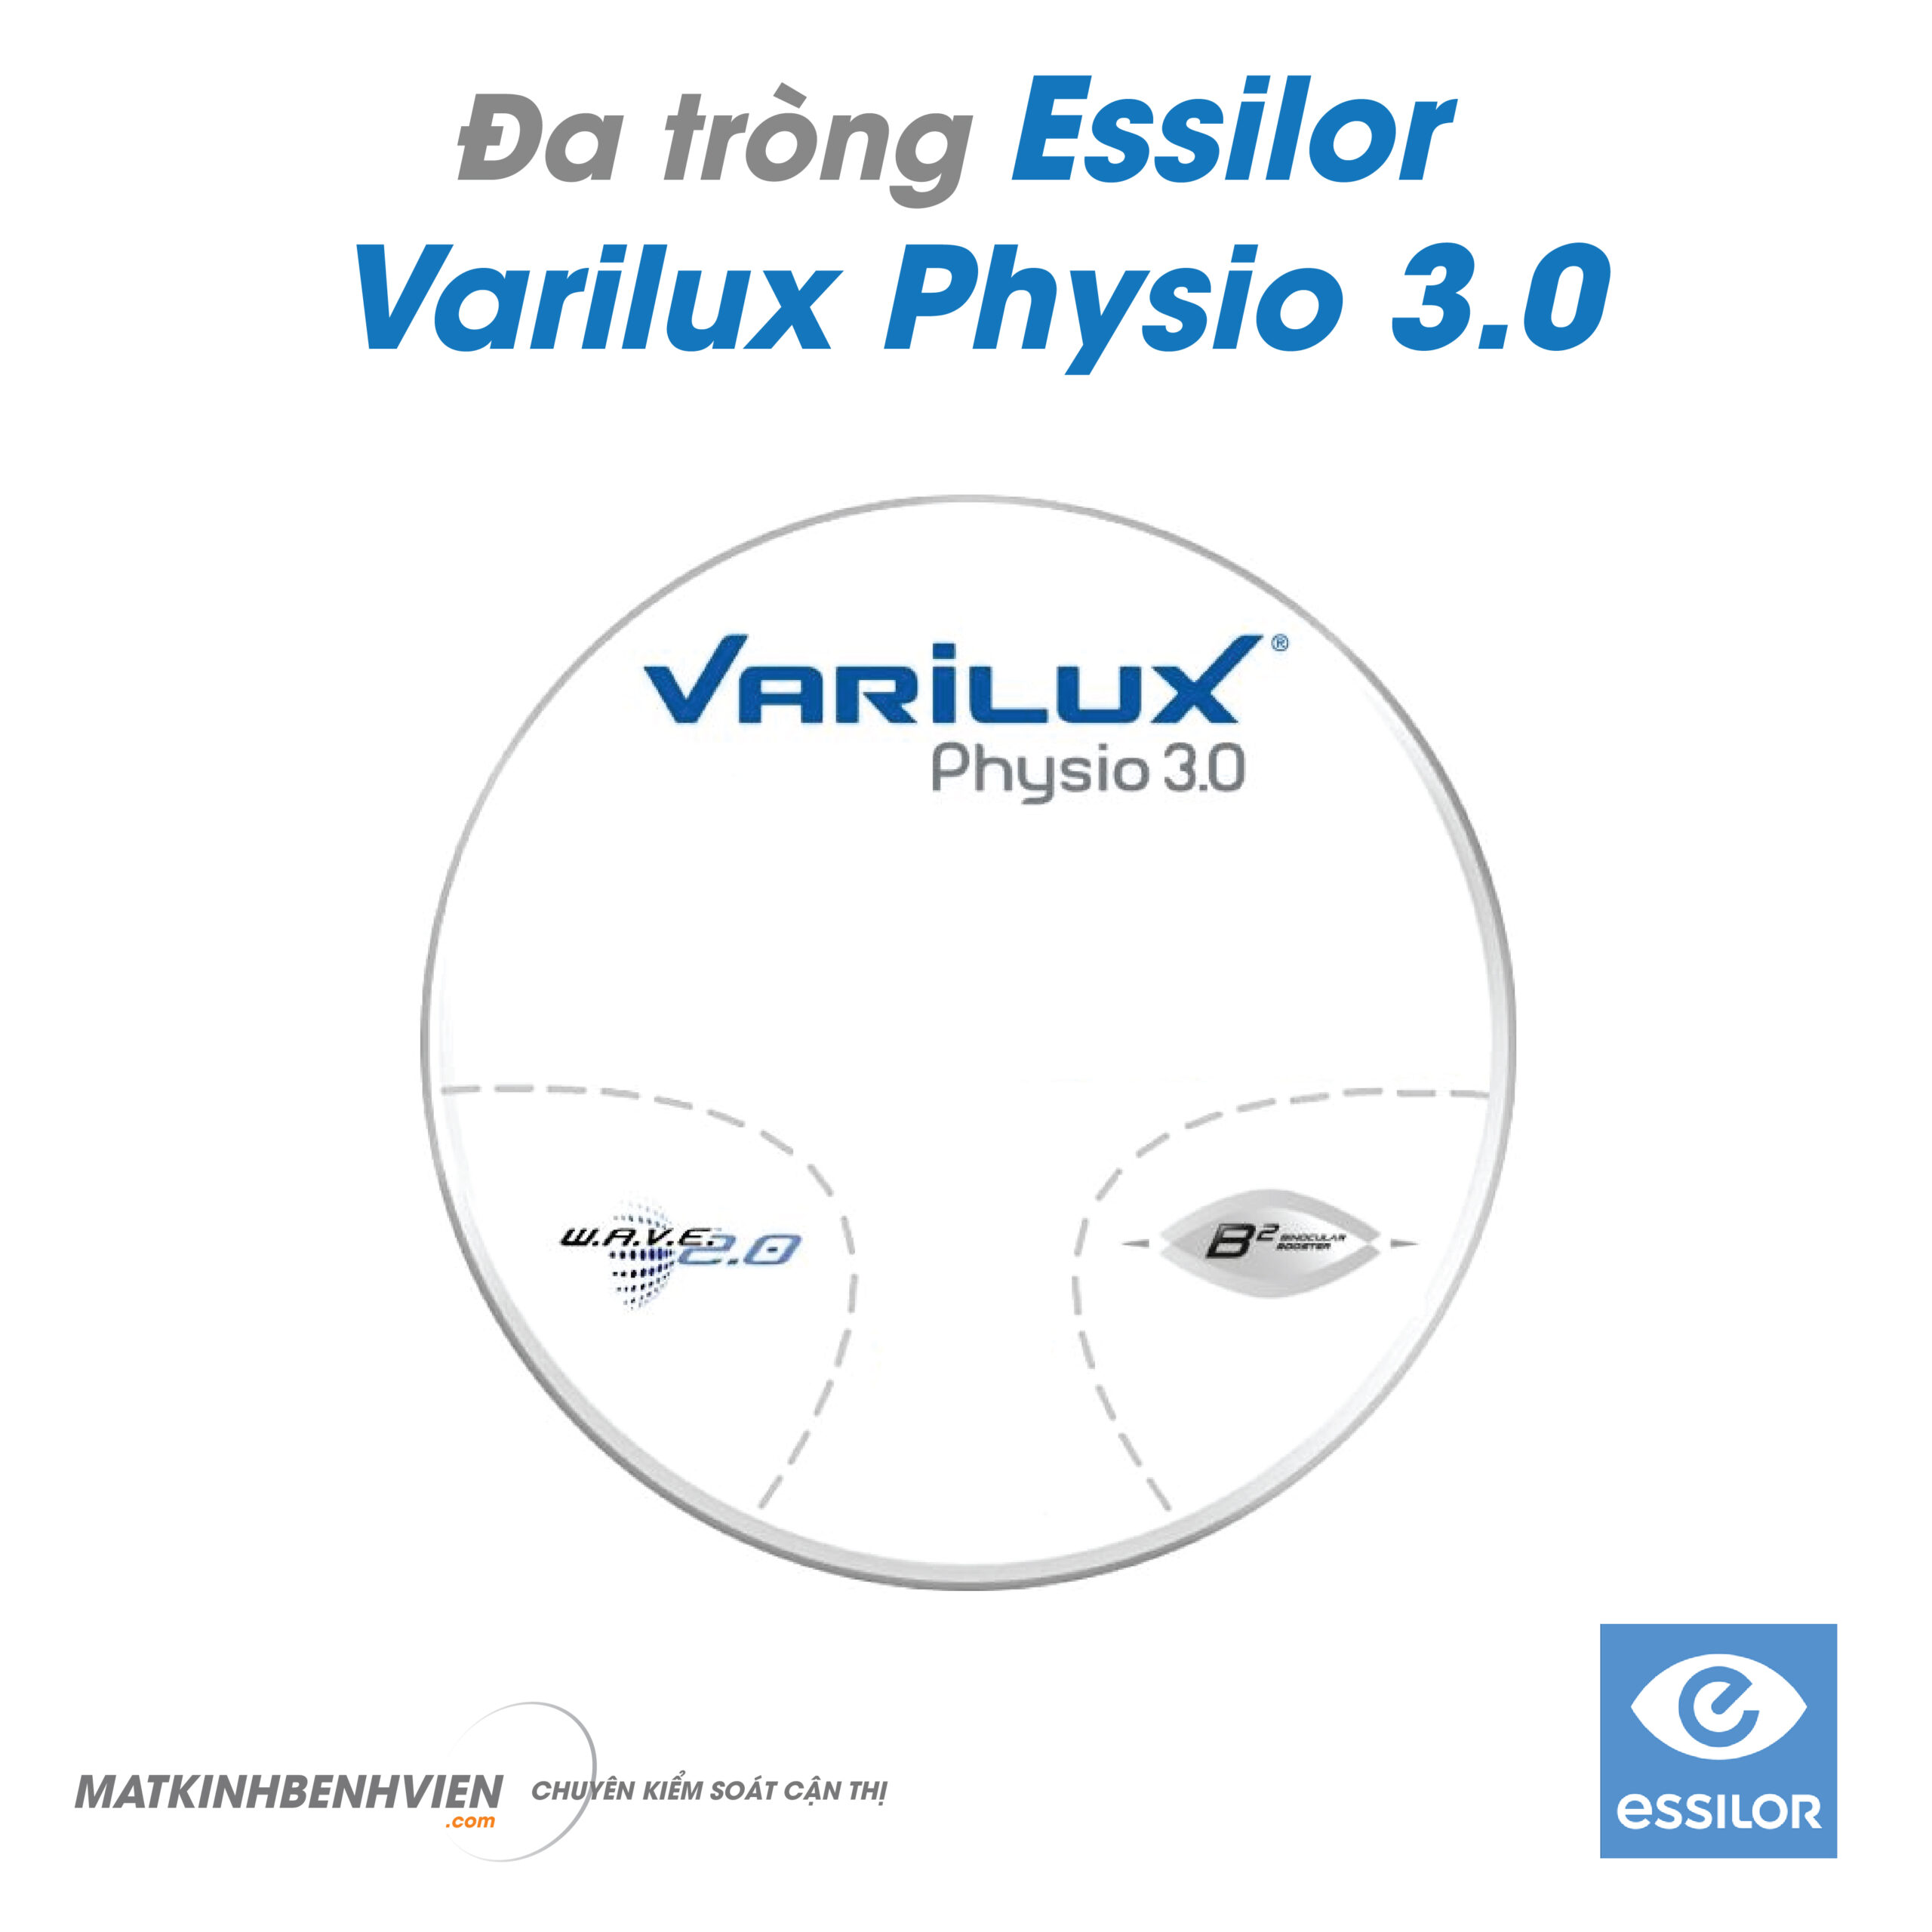 Đa tròng Essilor Varilux Physio 3.0